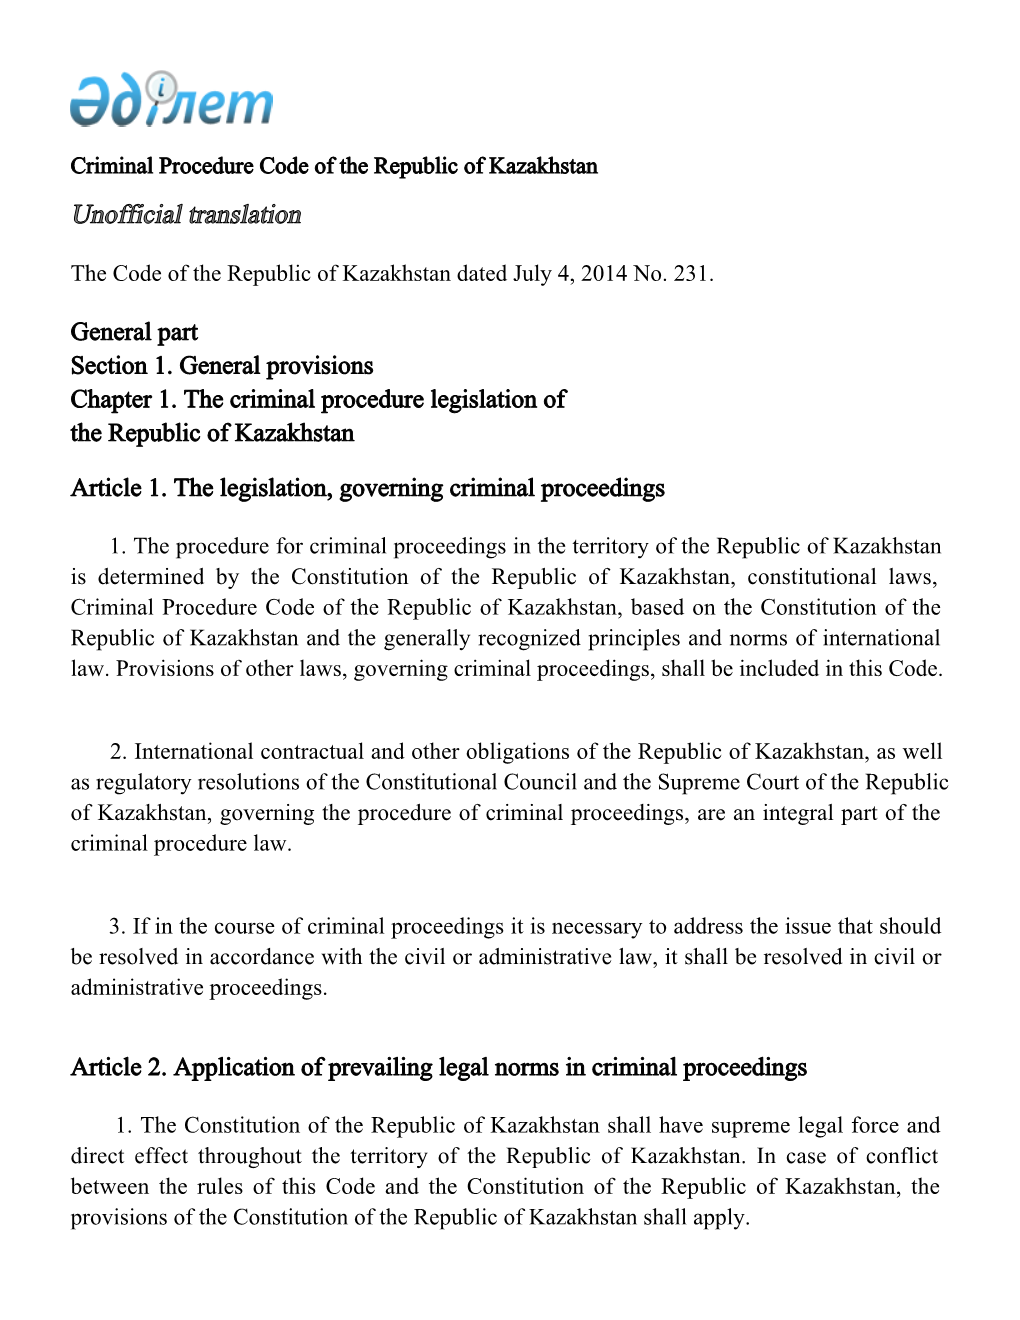 Criminal Procedure Code of the Republic of Kazakhstan Unofficial Translation